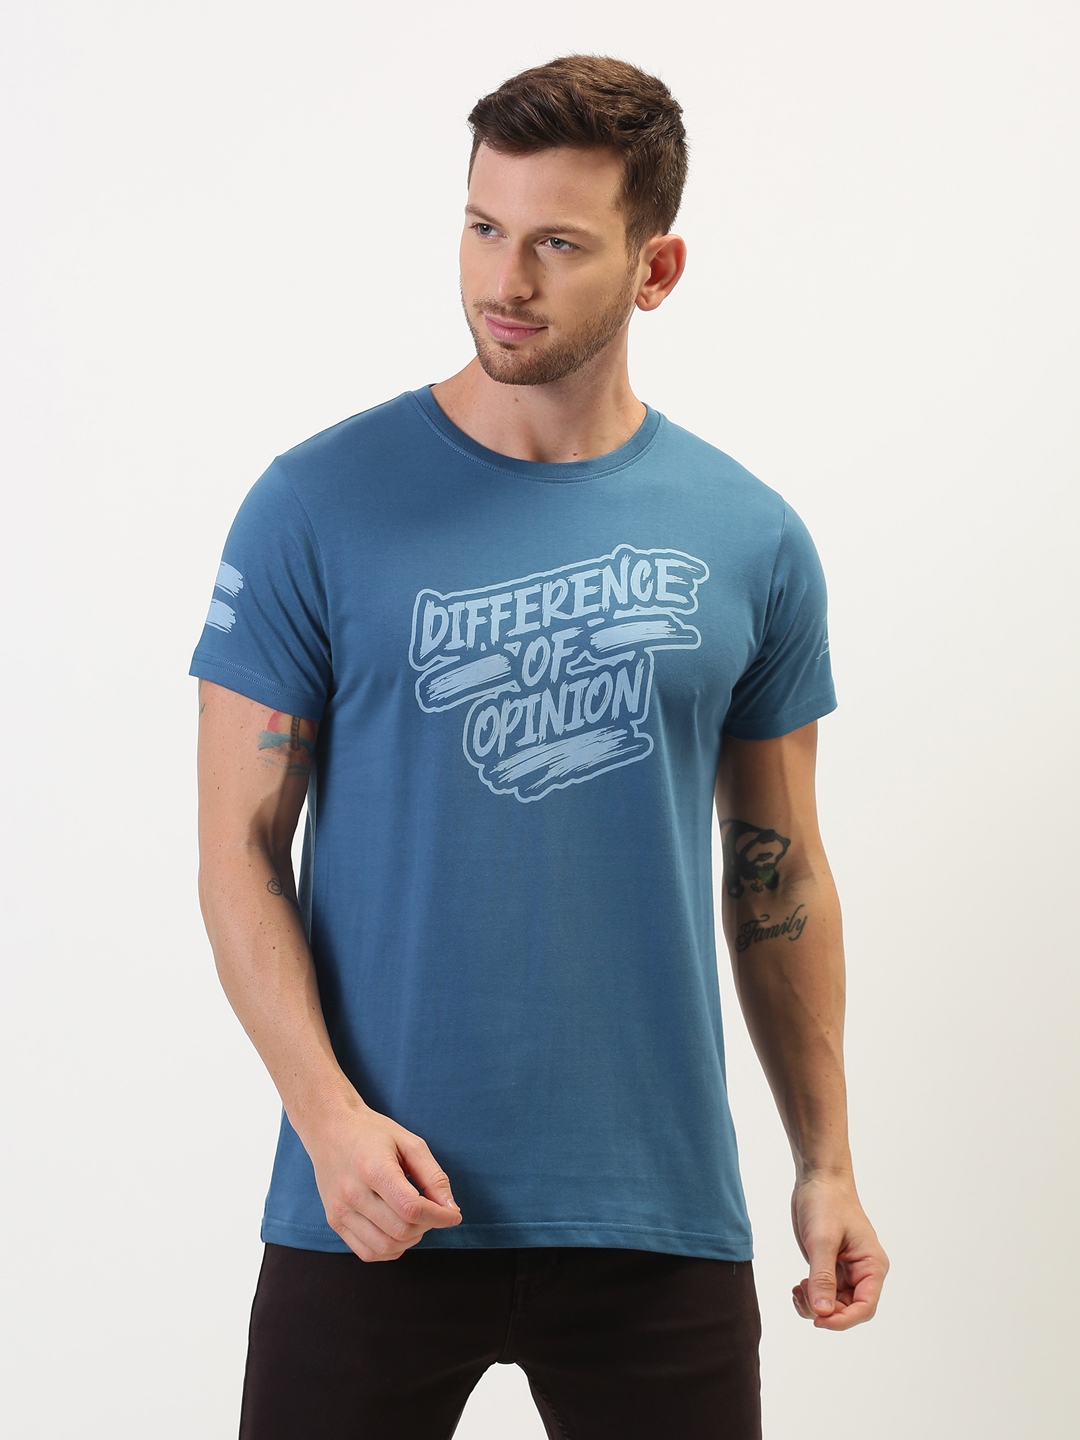 Difference of Opinion | Difference of Opinion Typographic Printed T-Shirt